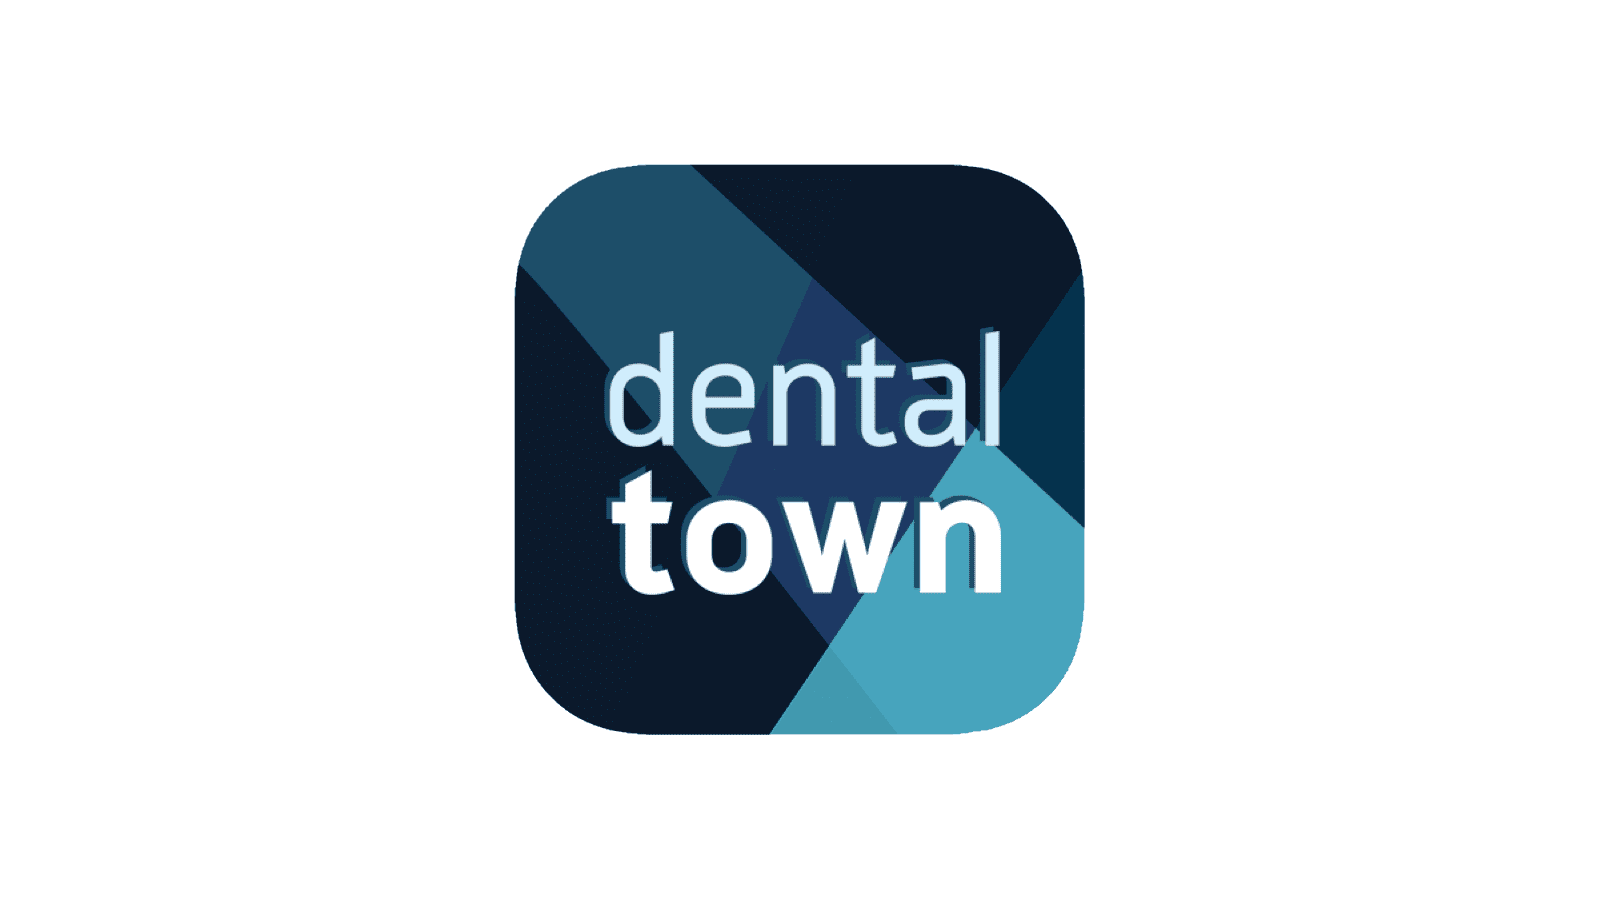 Dental town logo